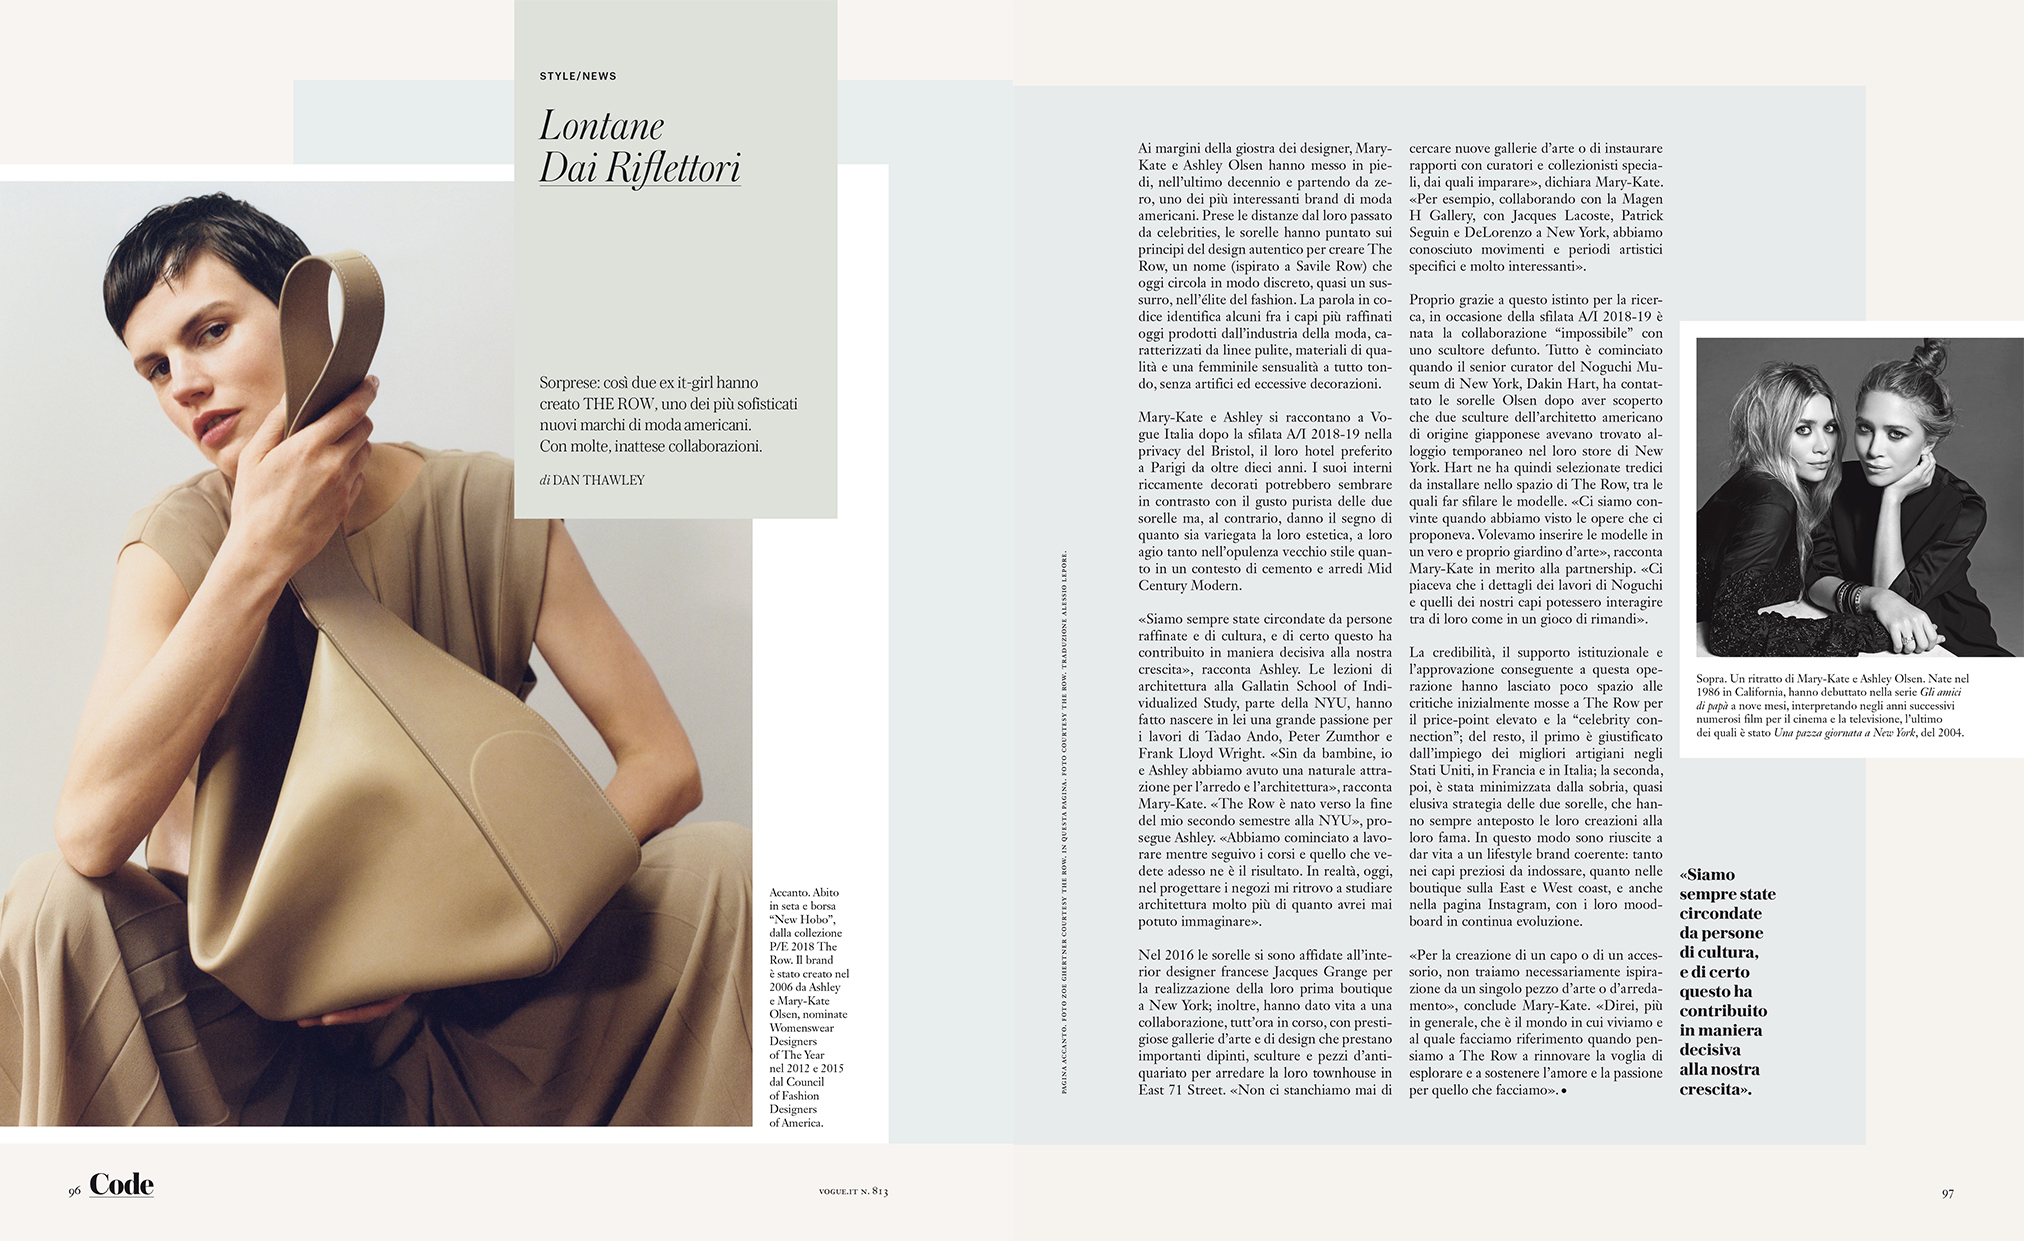 Dan Thawley | Vogue Italia: The Row | 1